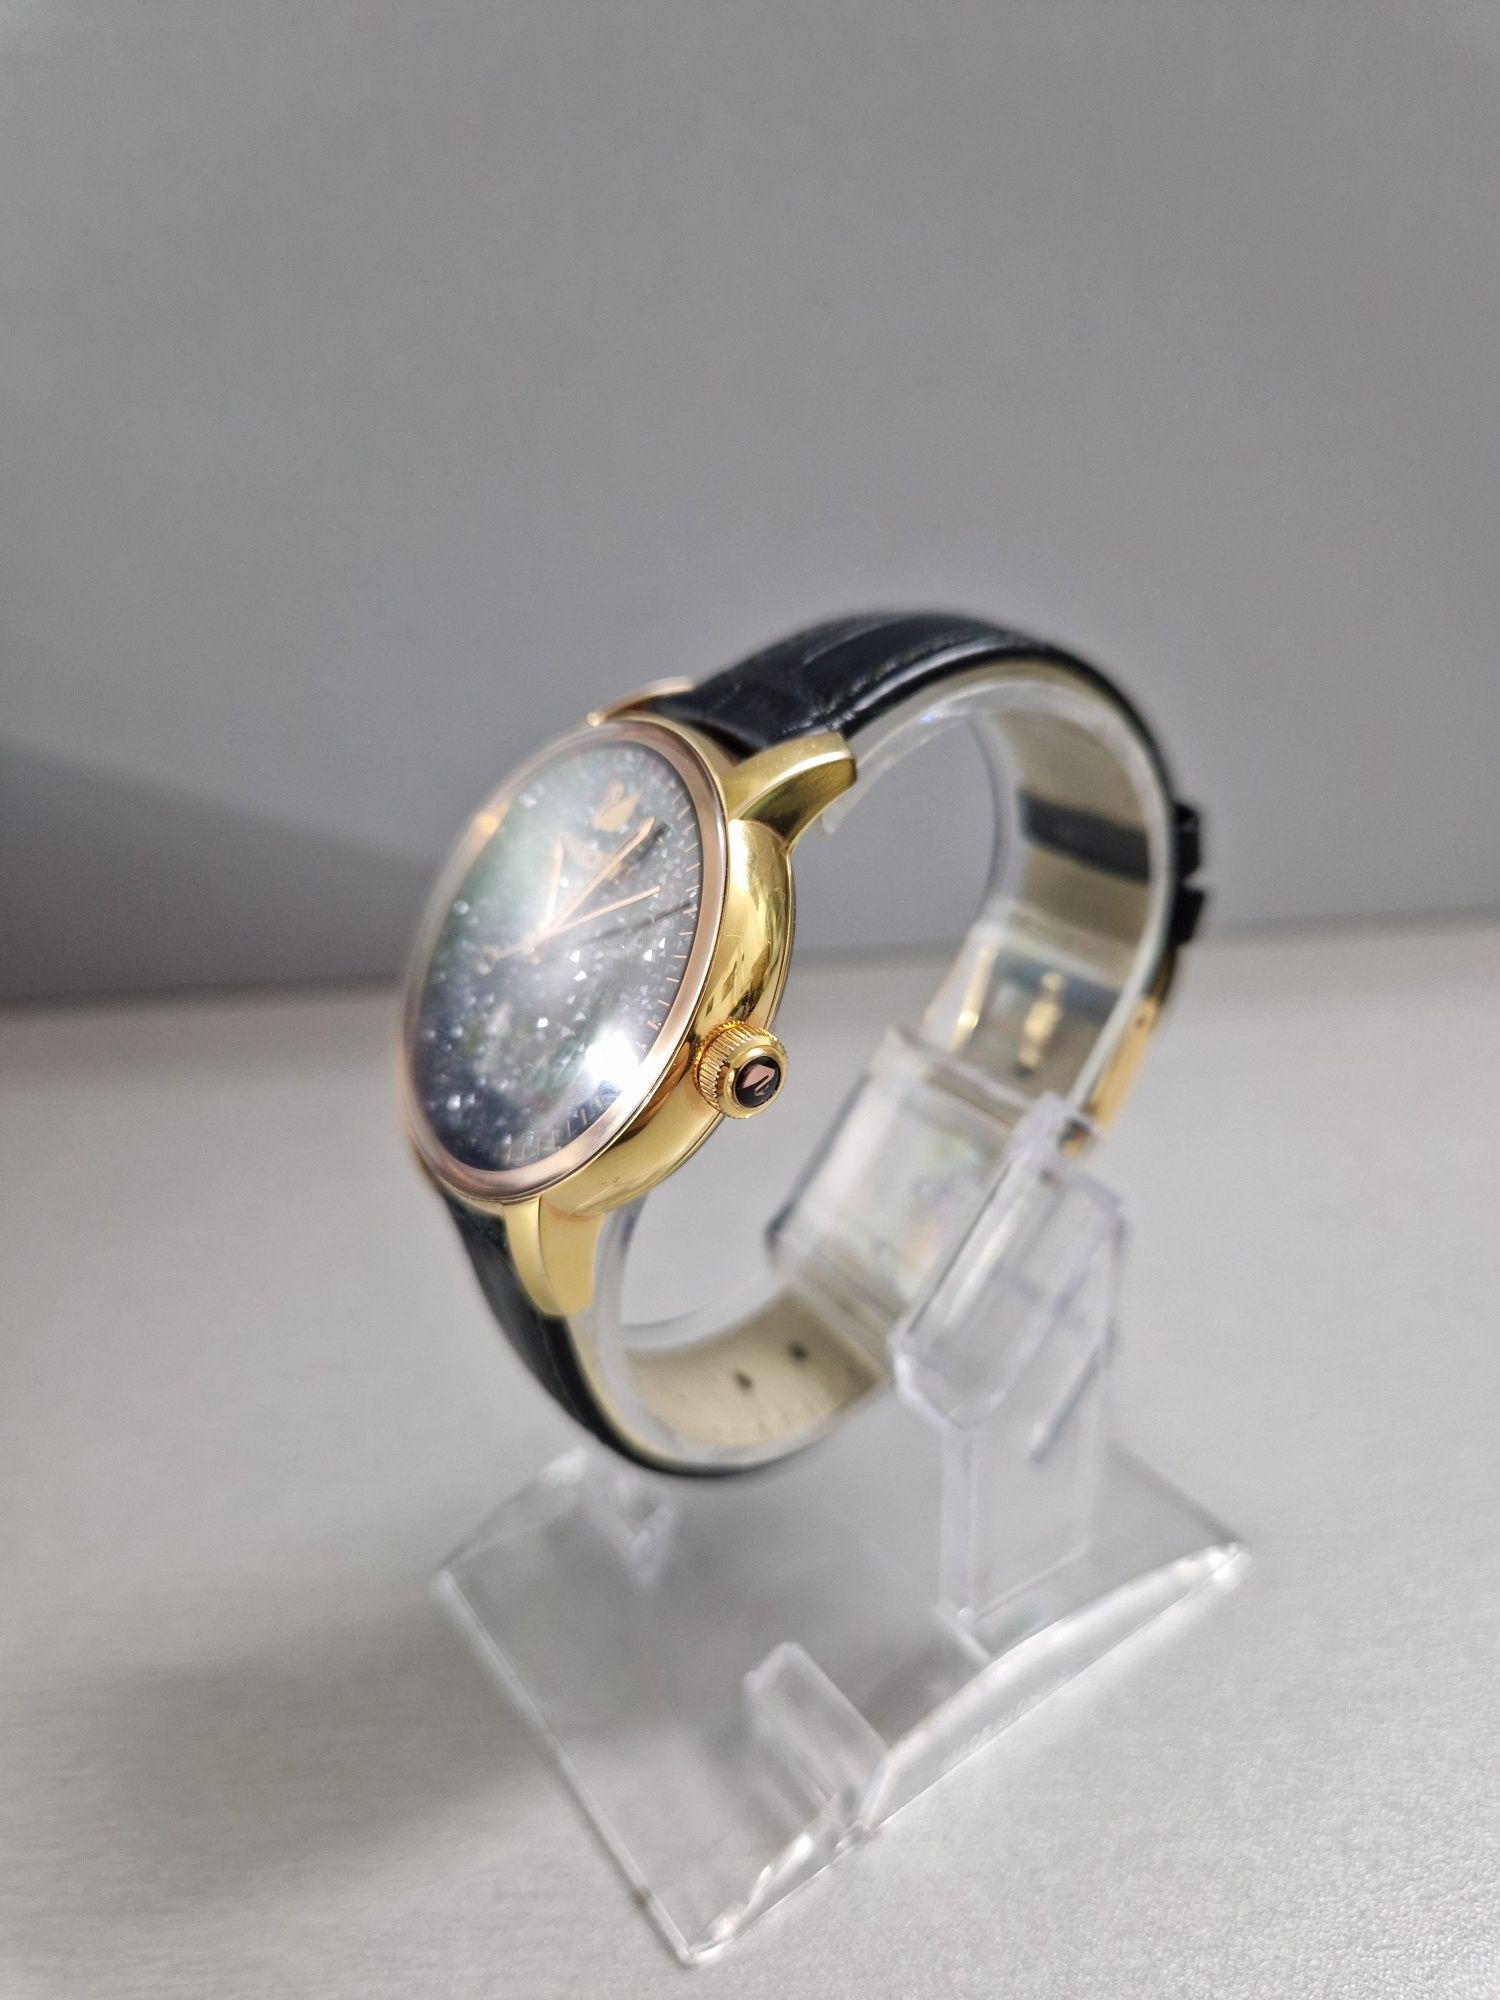 Дамски часовник Swarovski Crystalline Hours Black 5218902 Automatic, Н